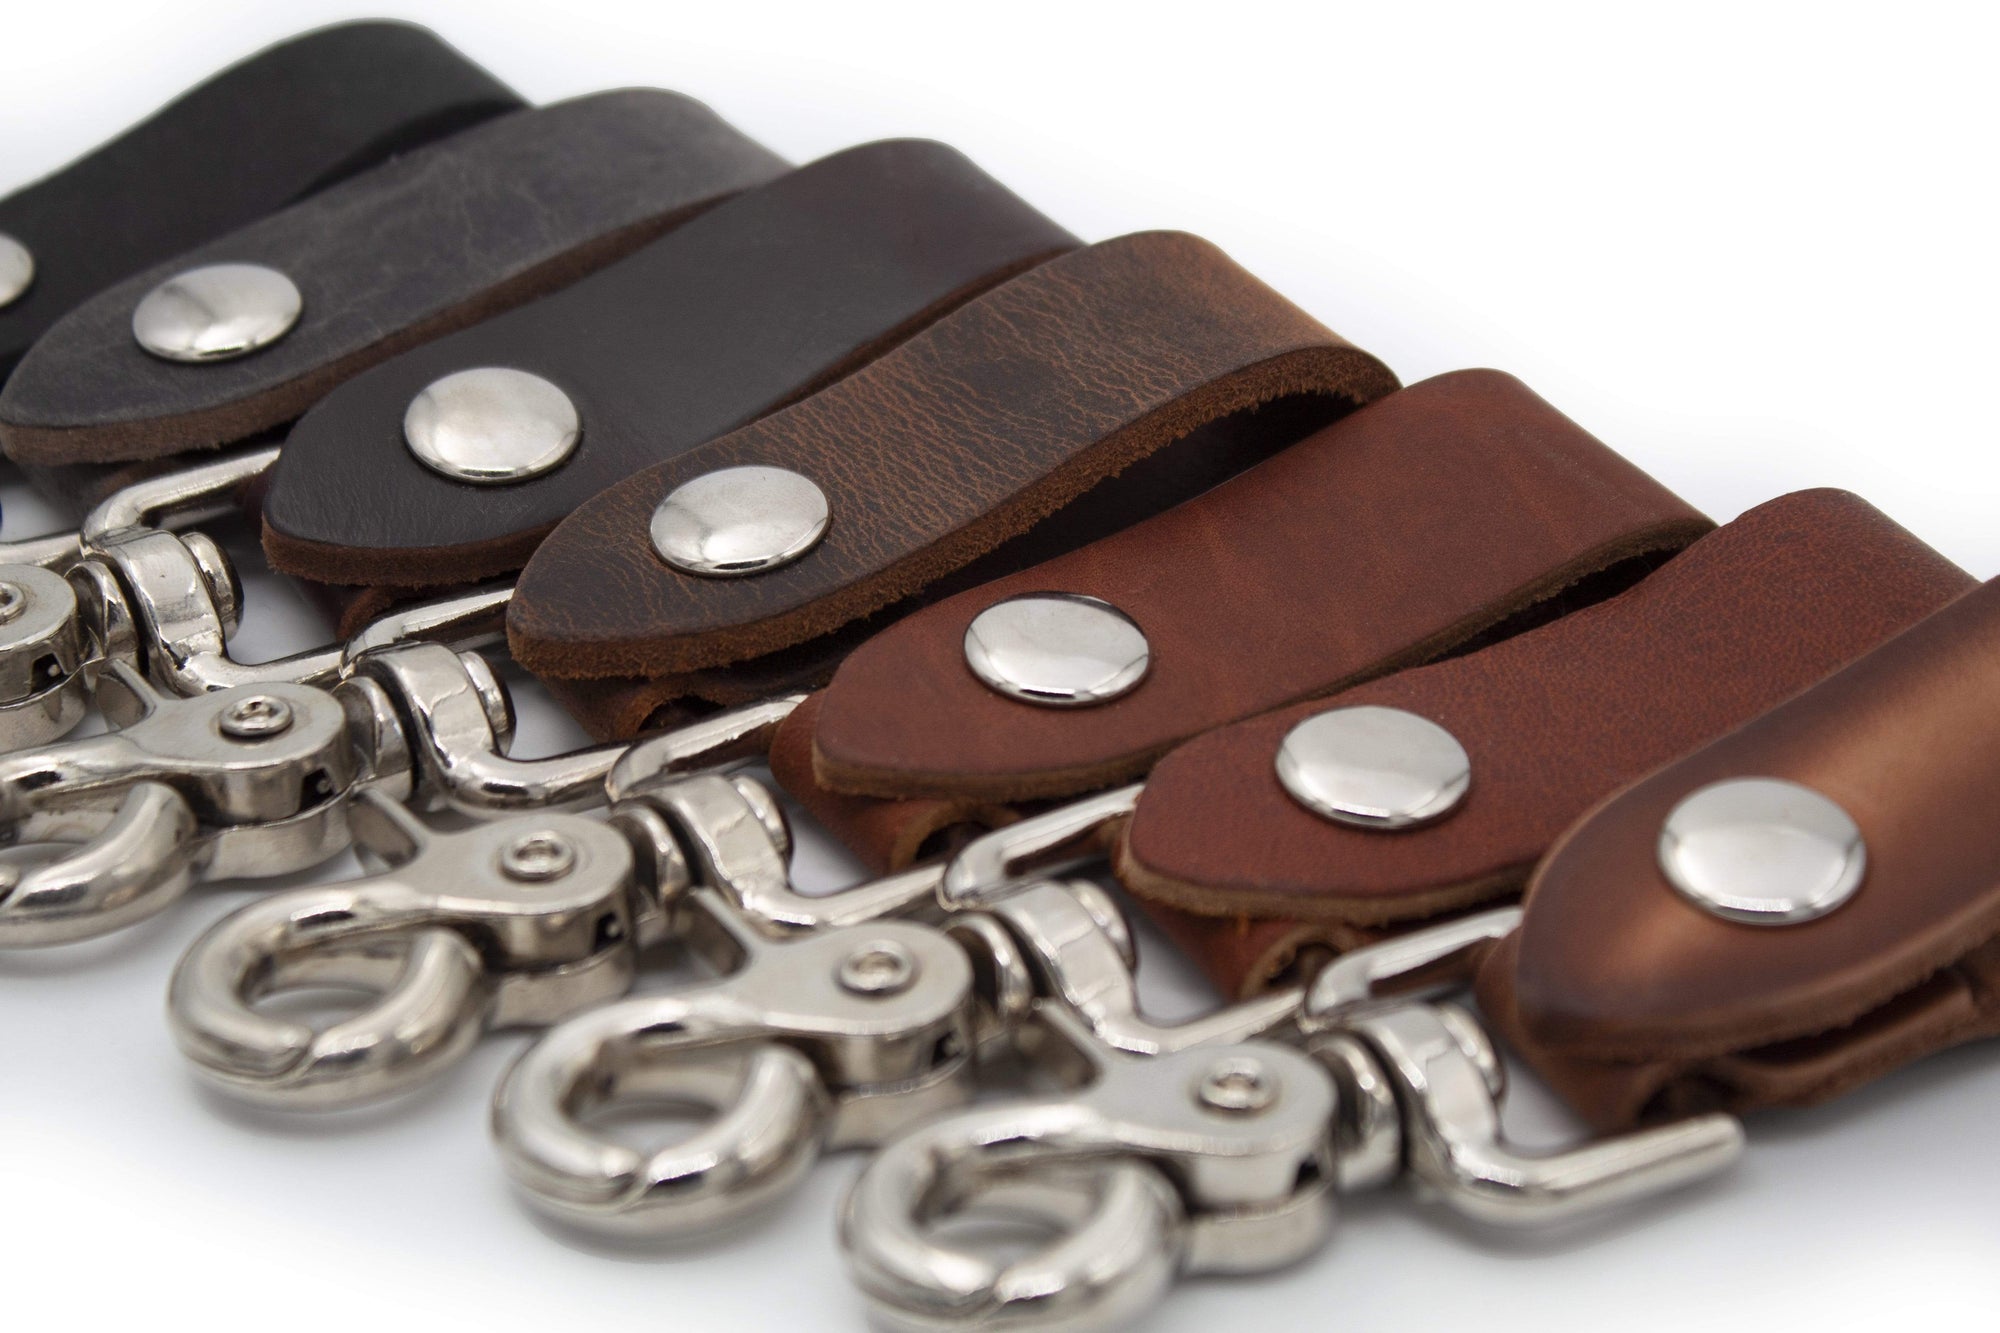 Leather Wrist Keychain - USA Made, Tan, Monogrammed, Full Grain Leather, Handmade by Mr. Lentz